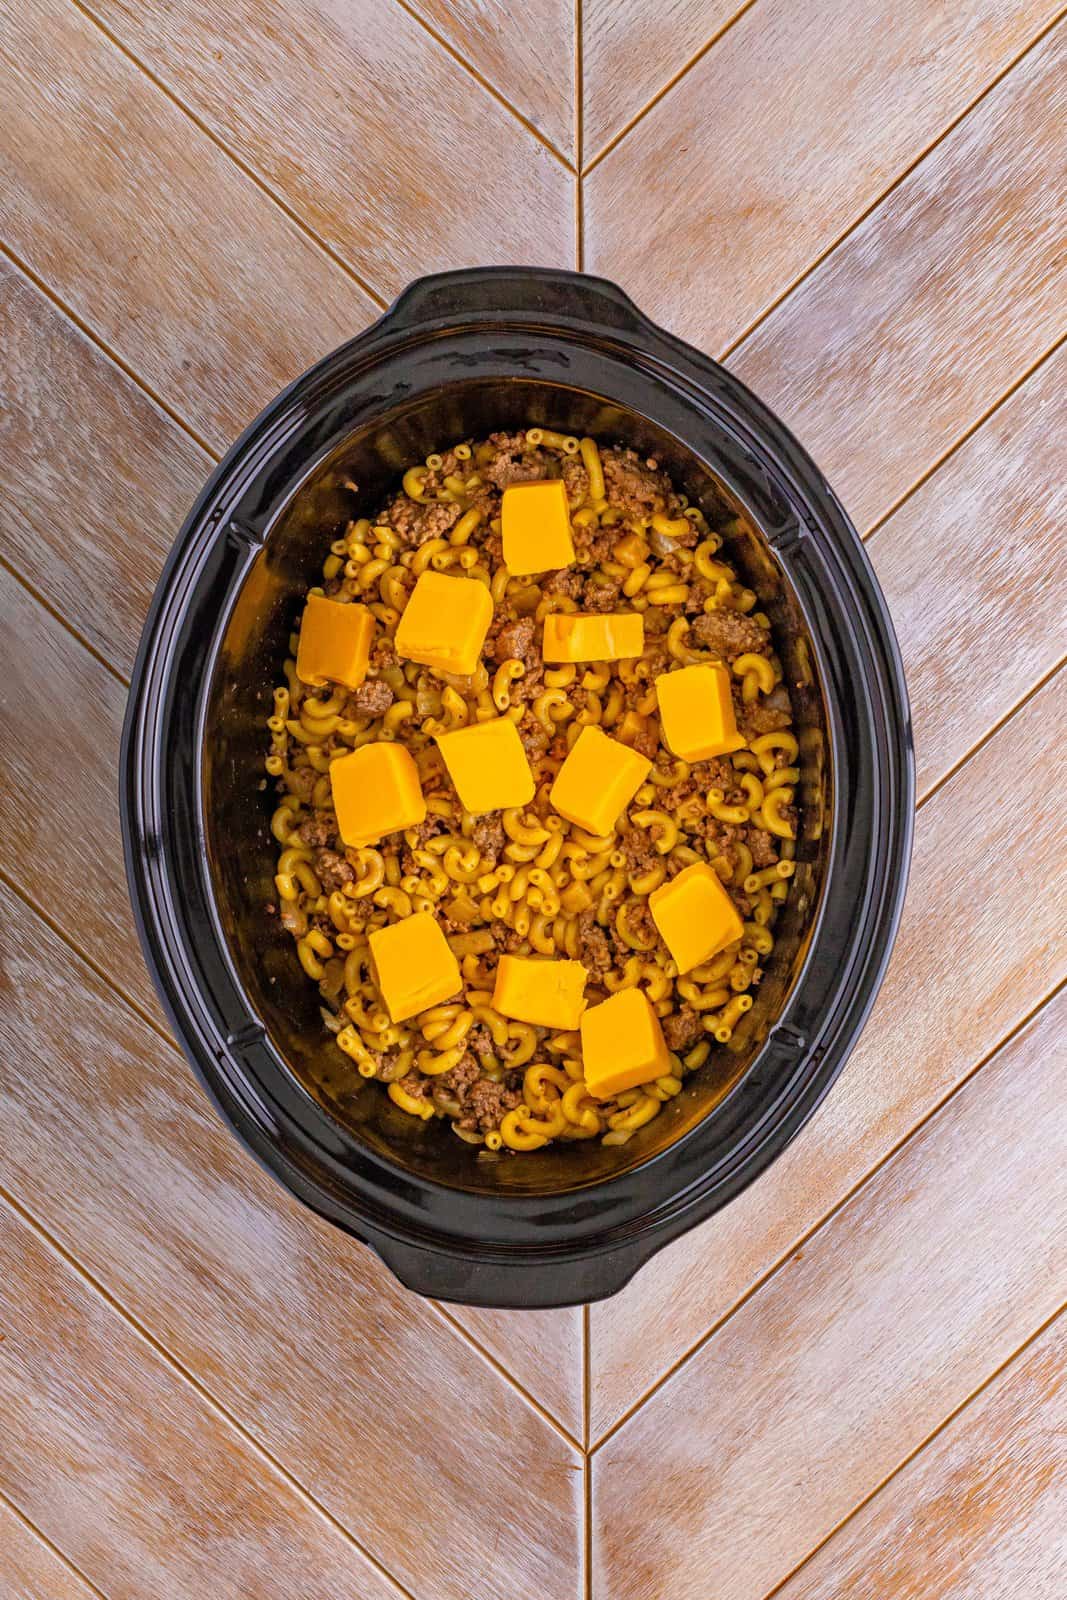 Cubed up Velveeta cheese on top of food in a crockpot.